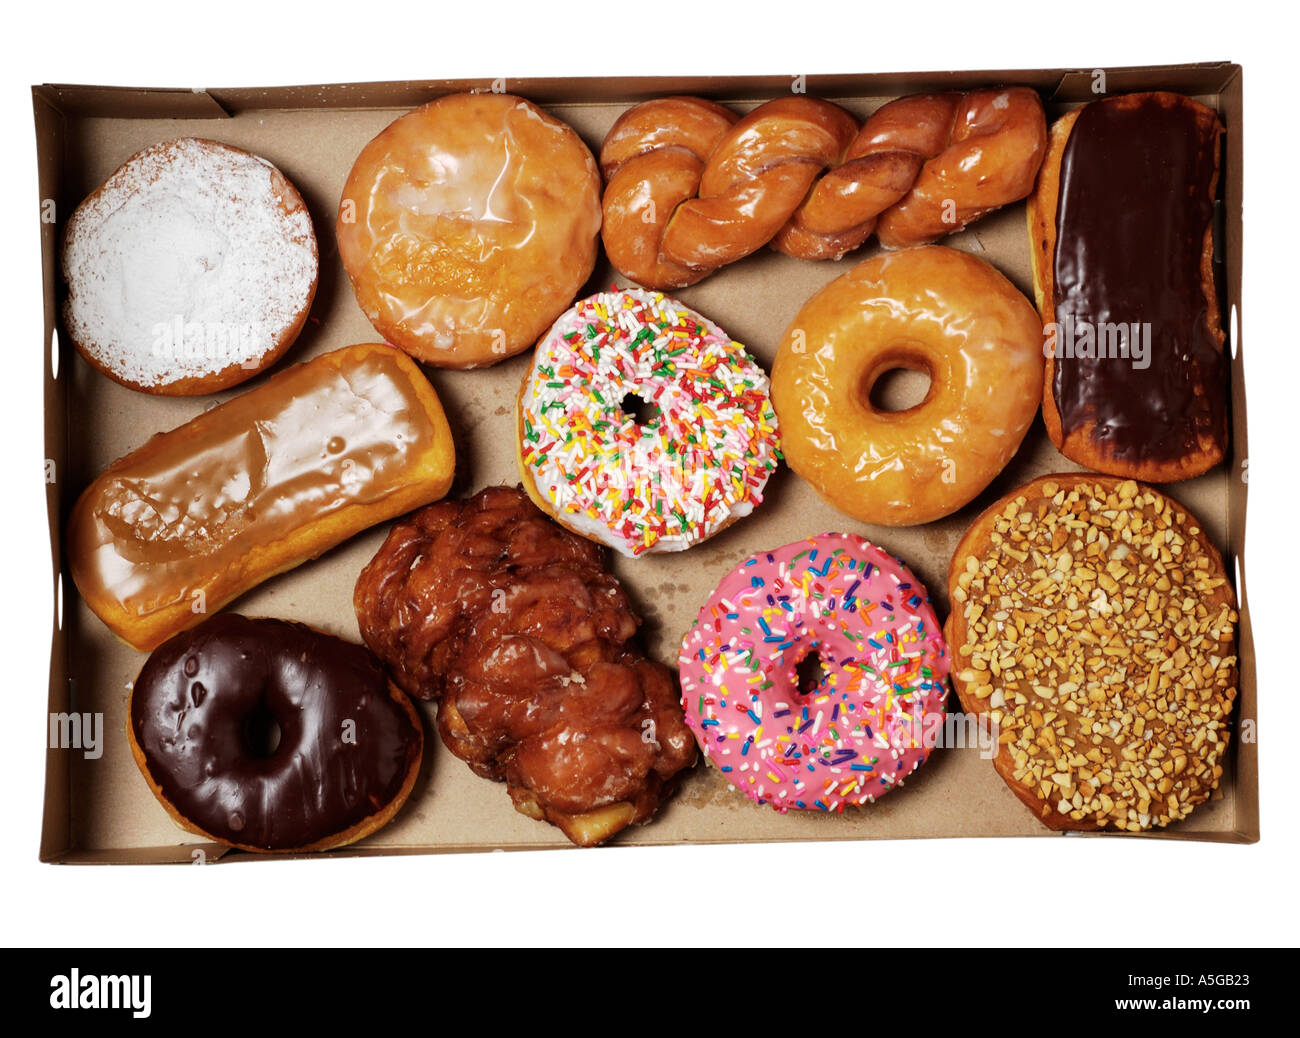 Box of doughnuts Stock Photo